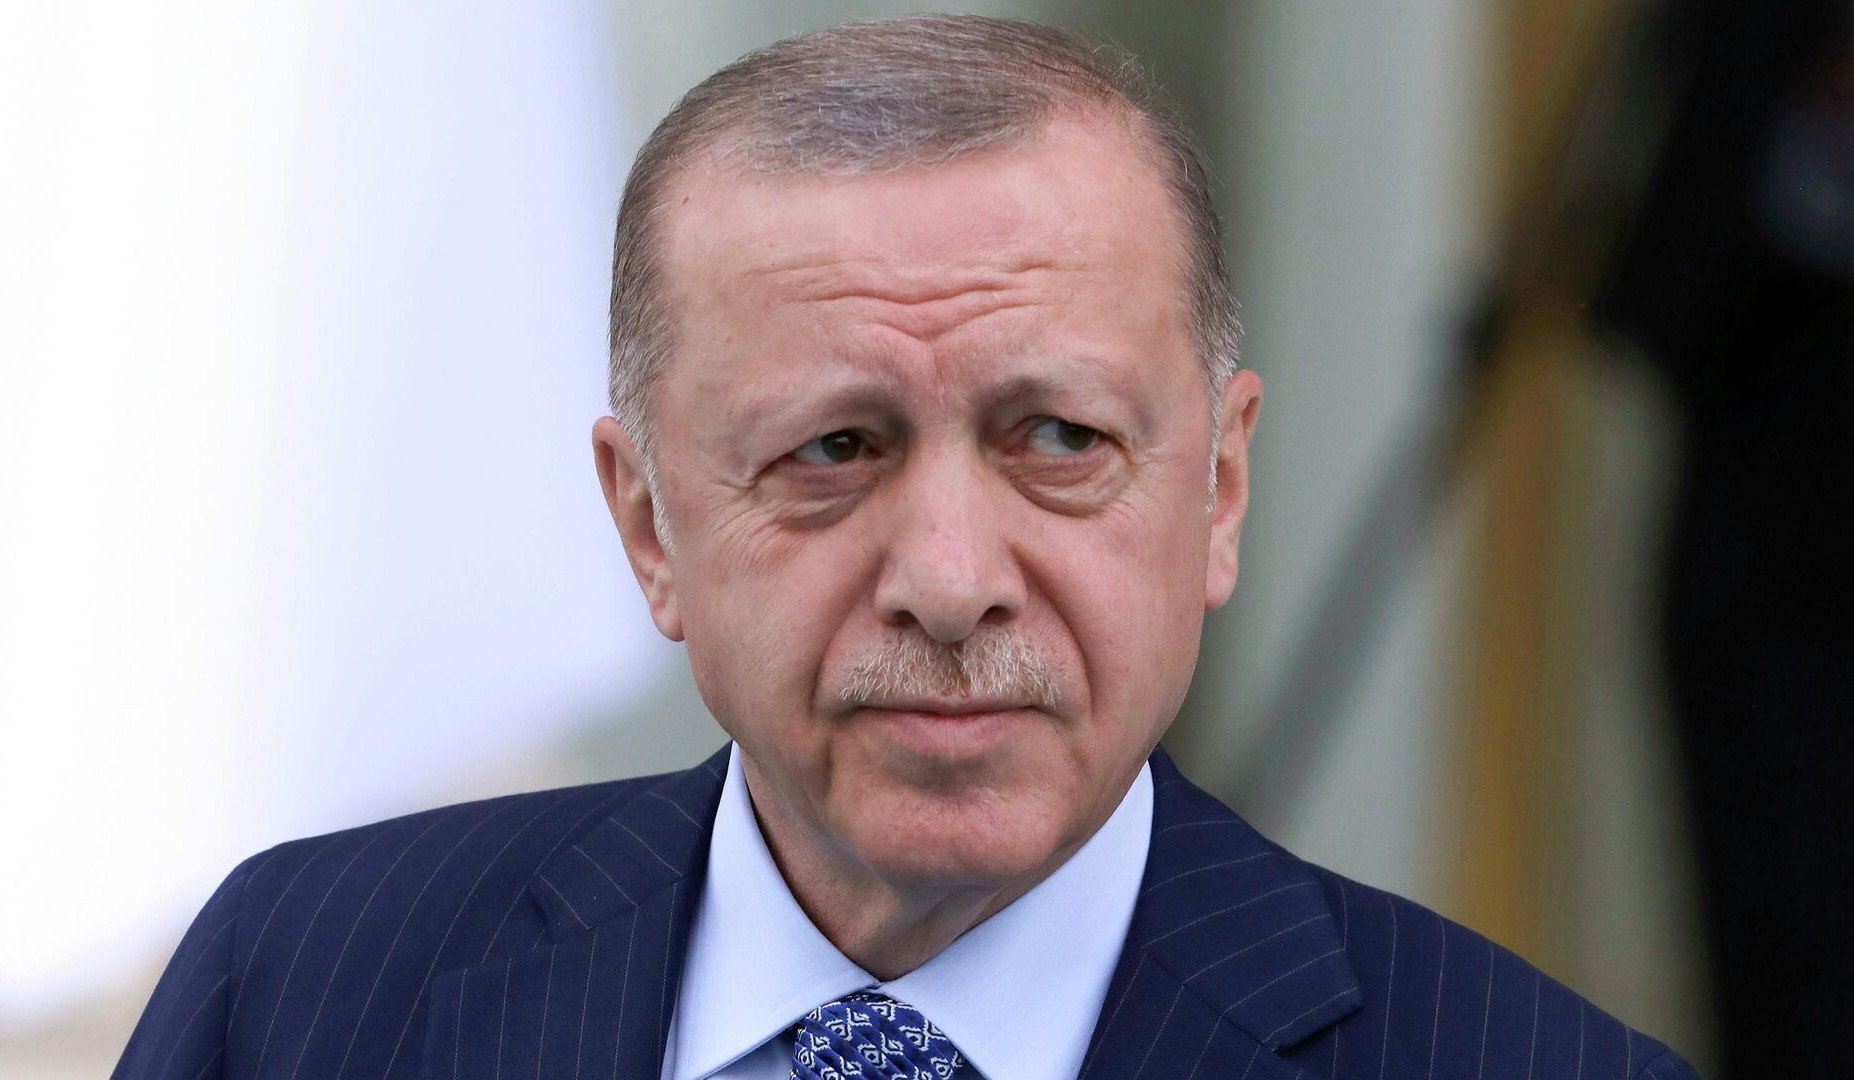 Erdogan called Israel's resumption of attacks on Gaza very negative